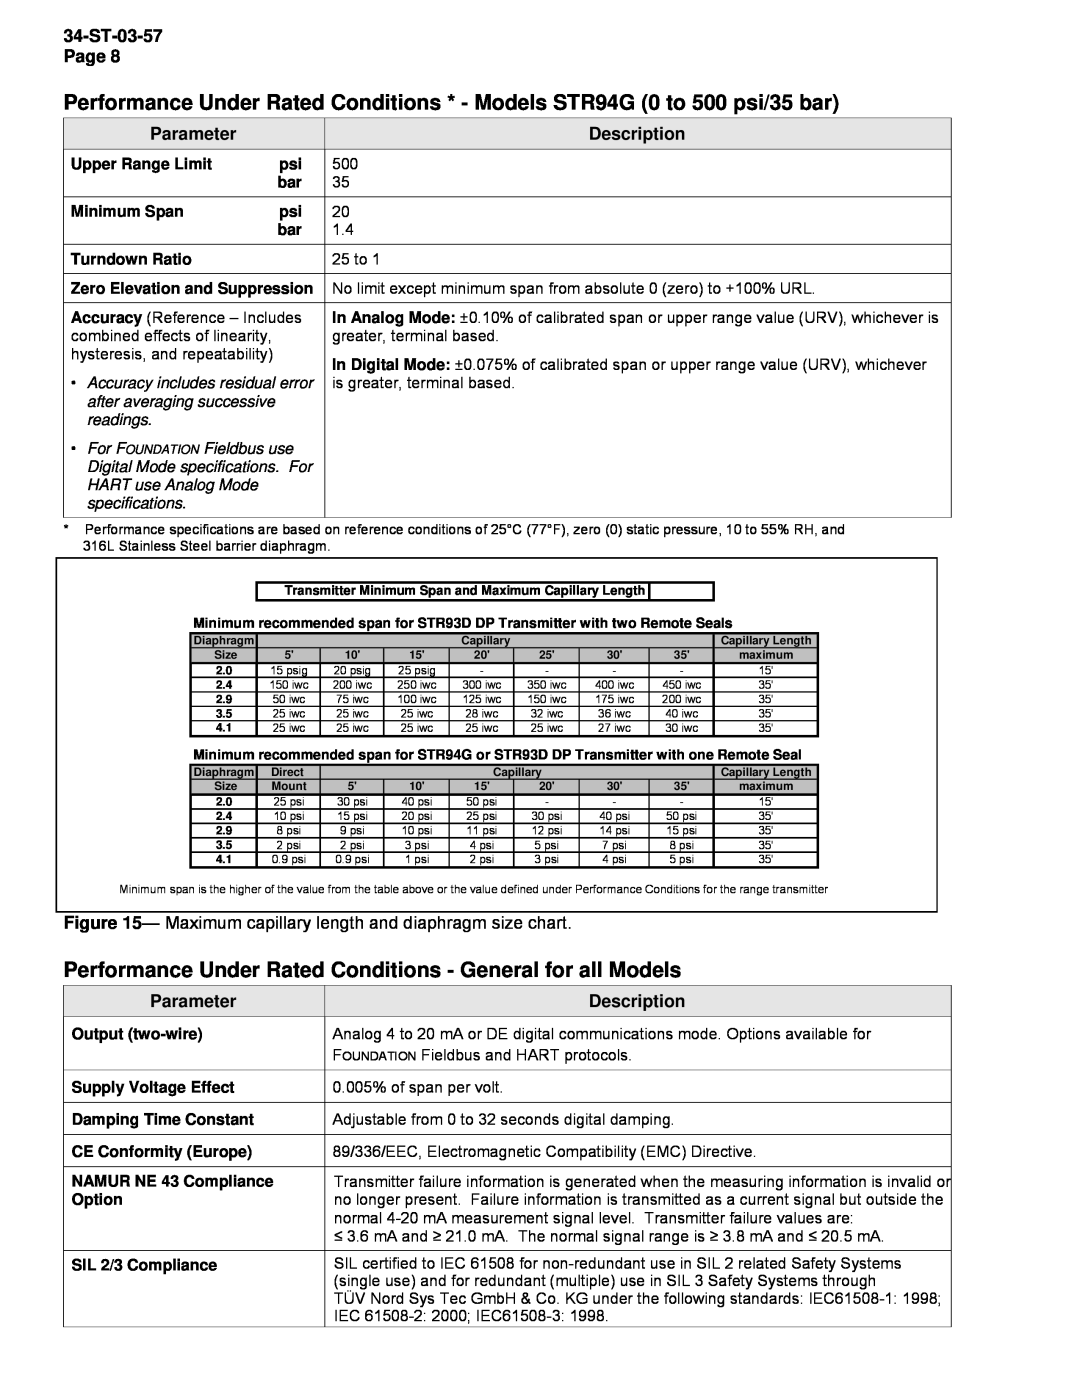 Honeywell STR93D, STR94G manual Upper Range Limit 